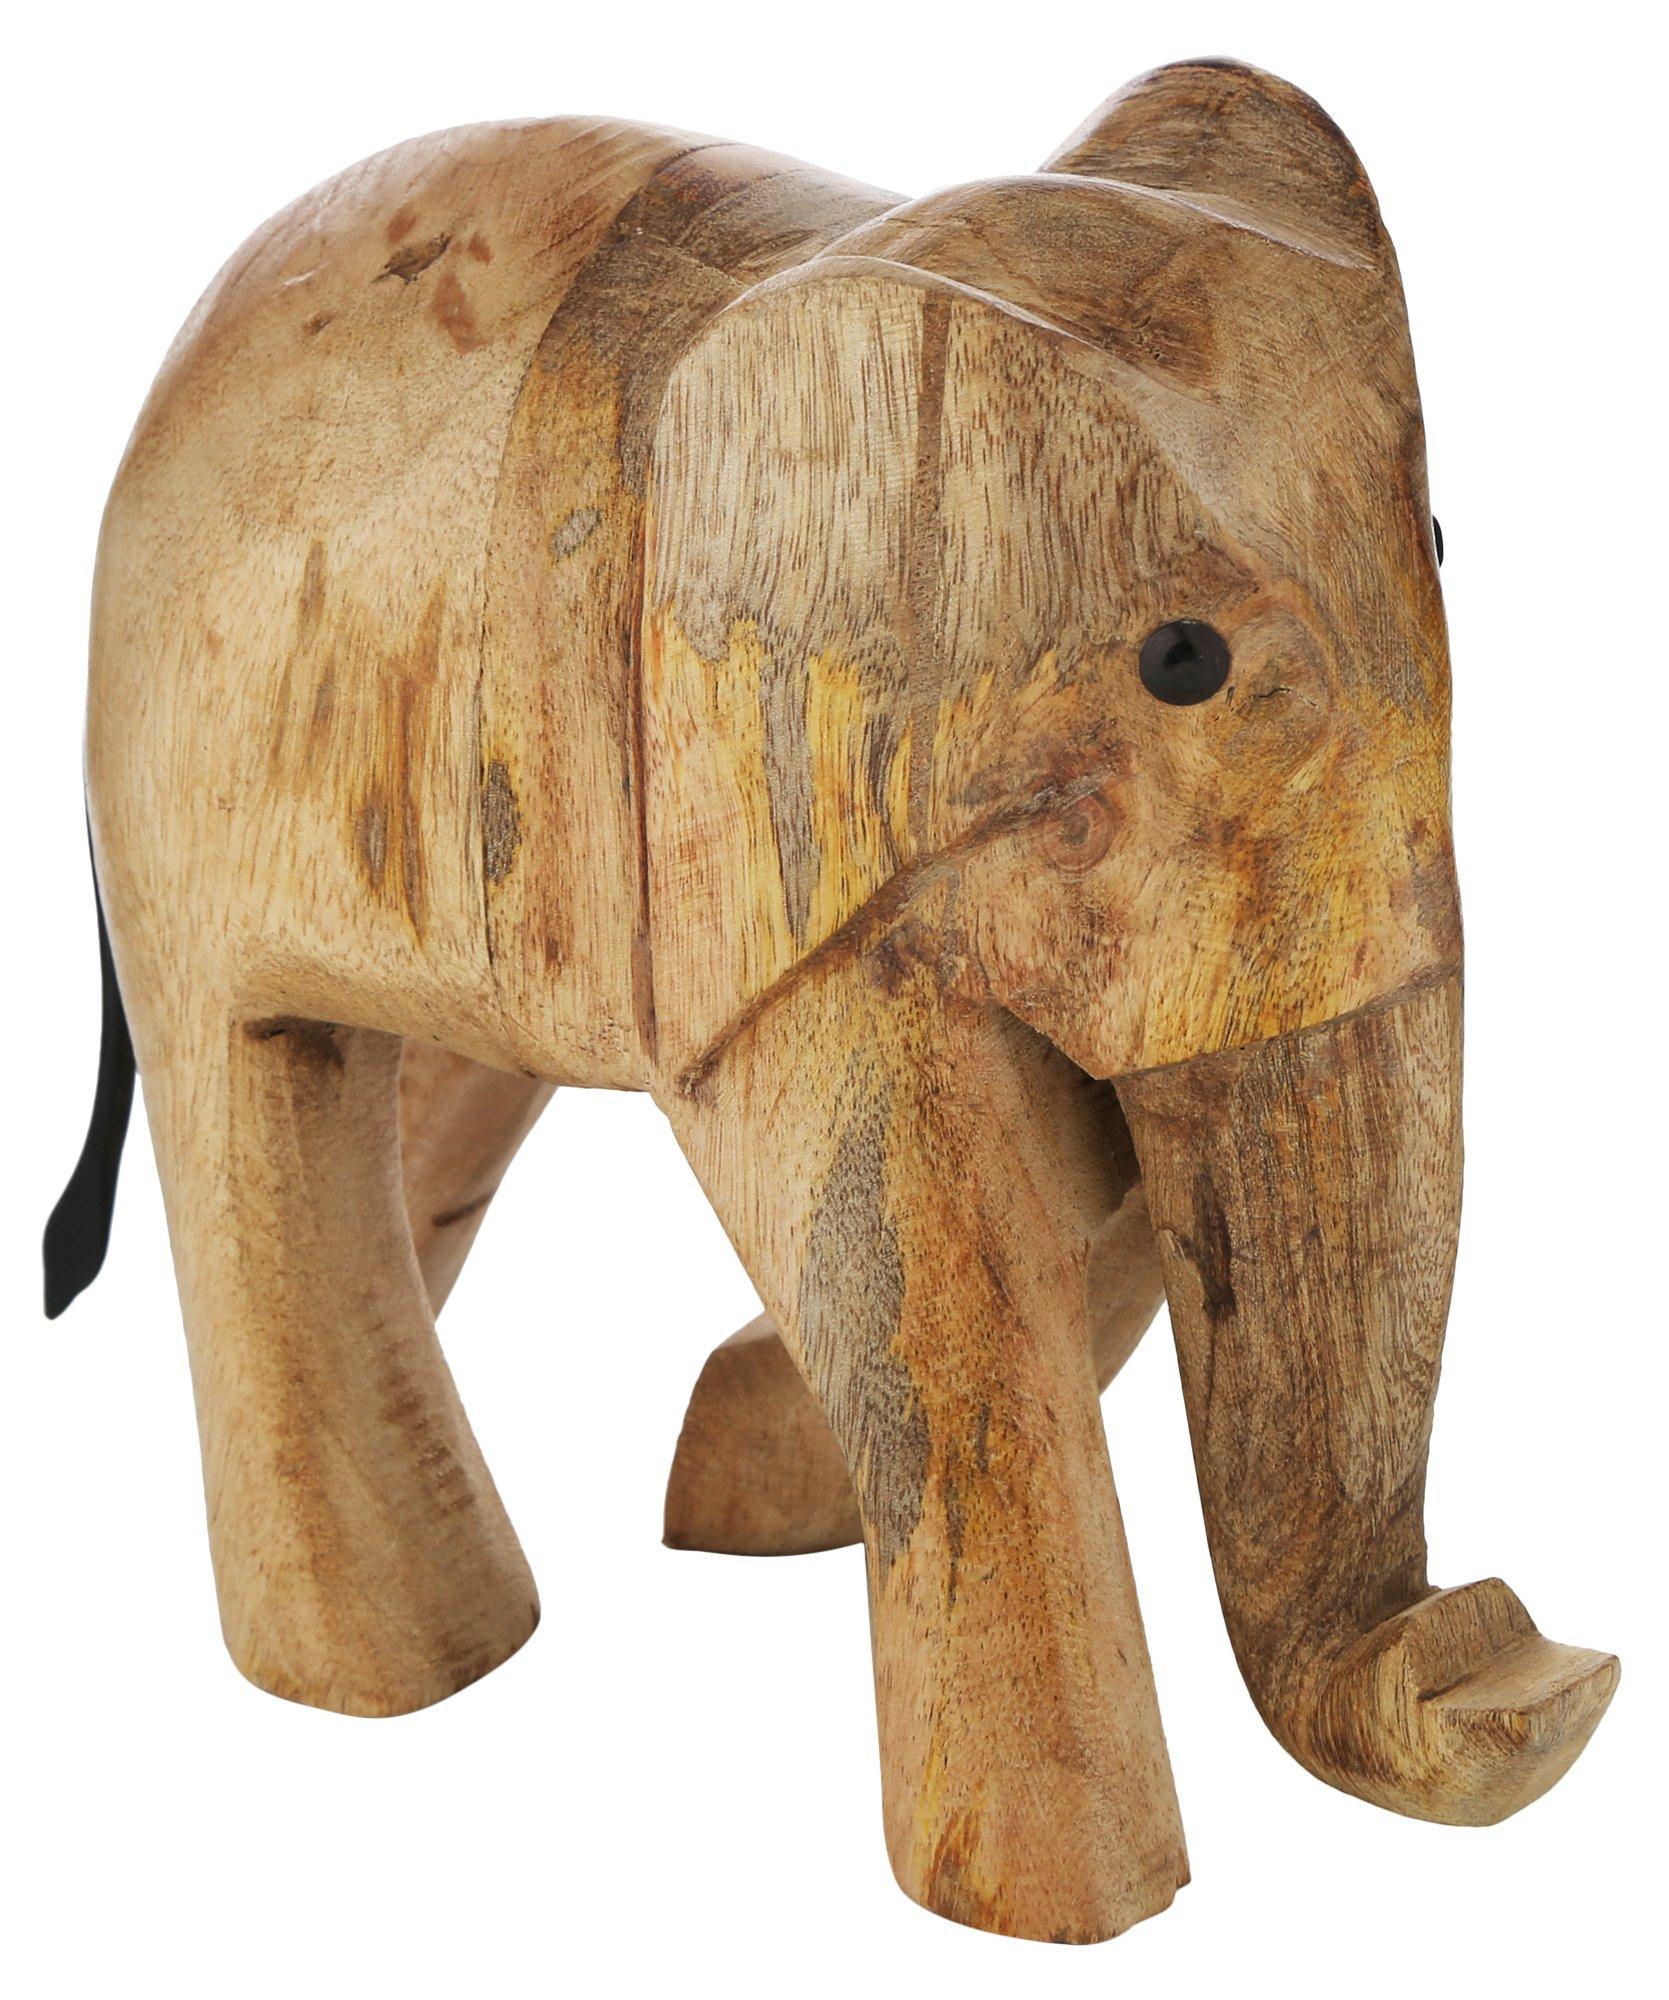 7x6 Decorative Wood Elephant